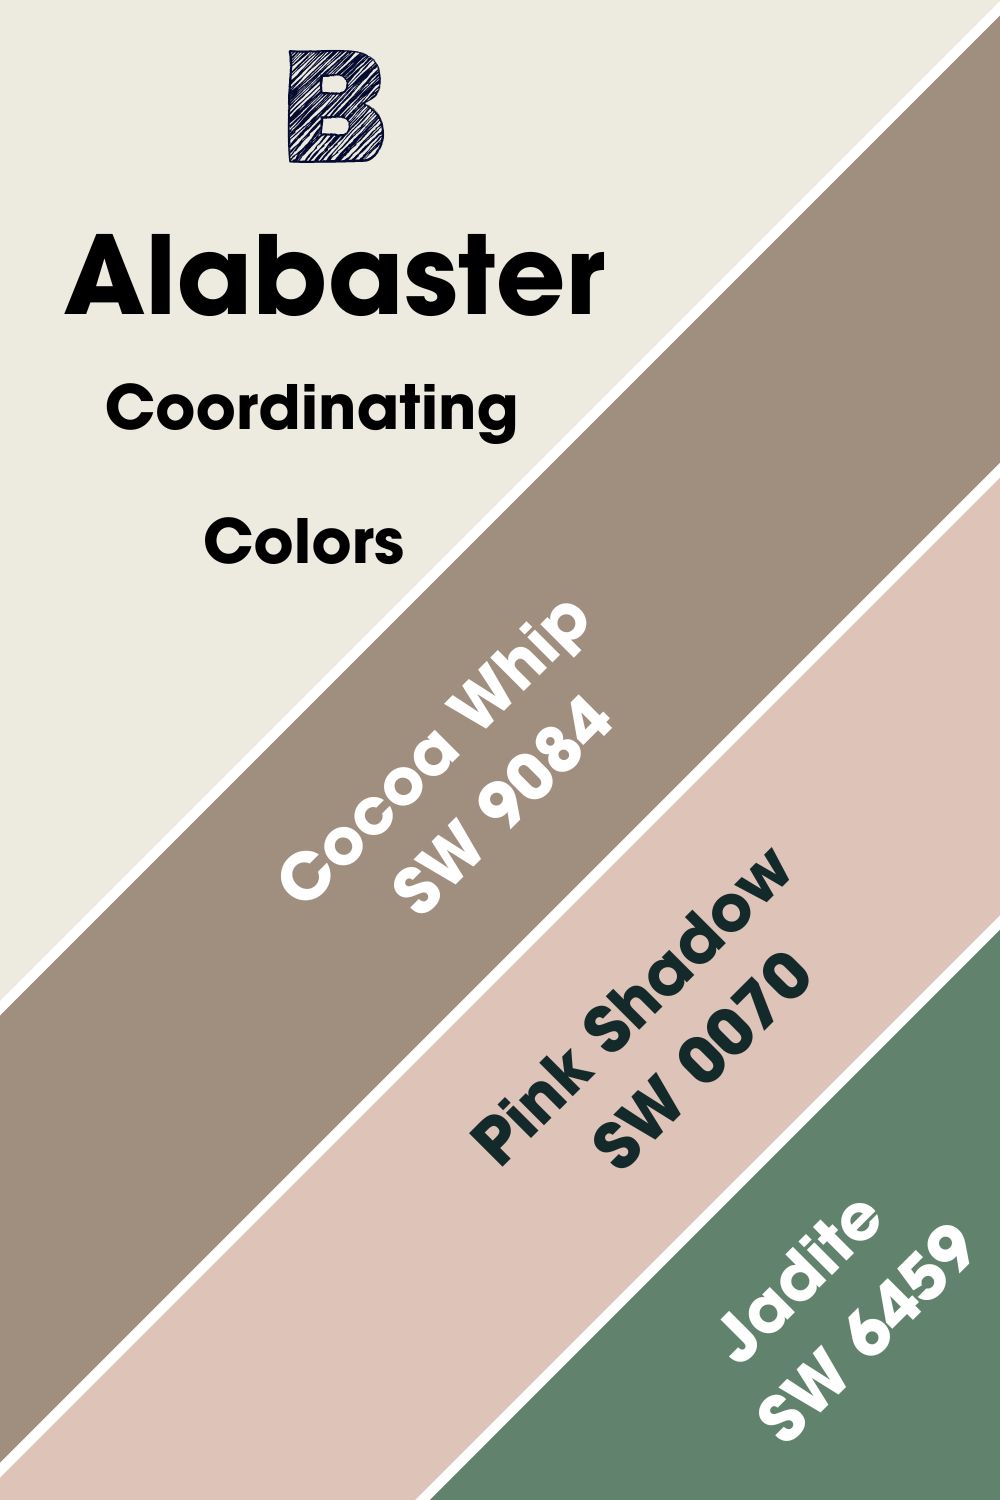 Sherwin Williams Alabaster Coordinating Colors